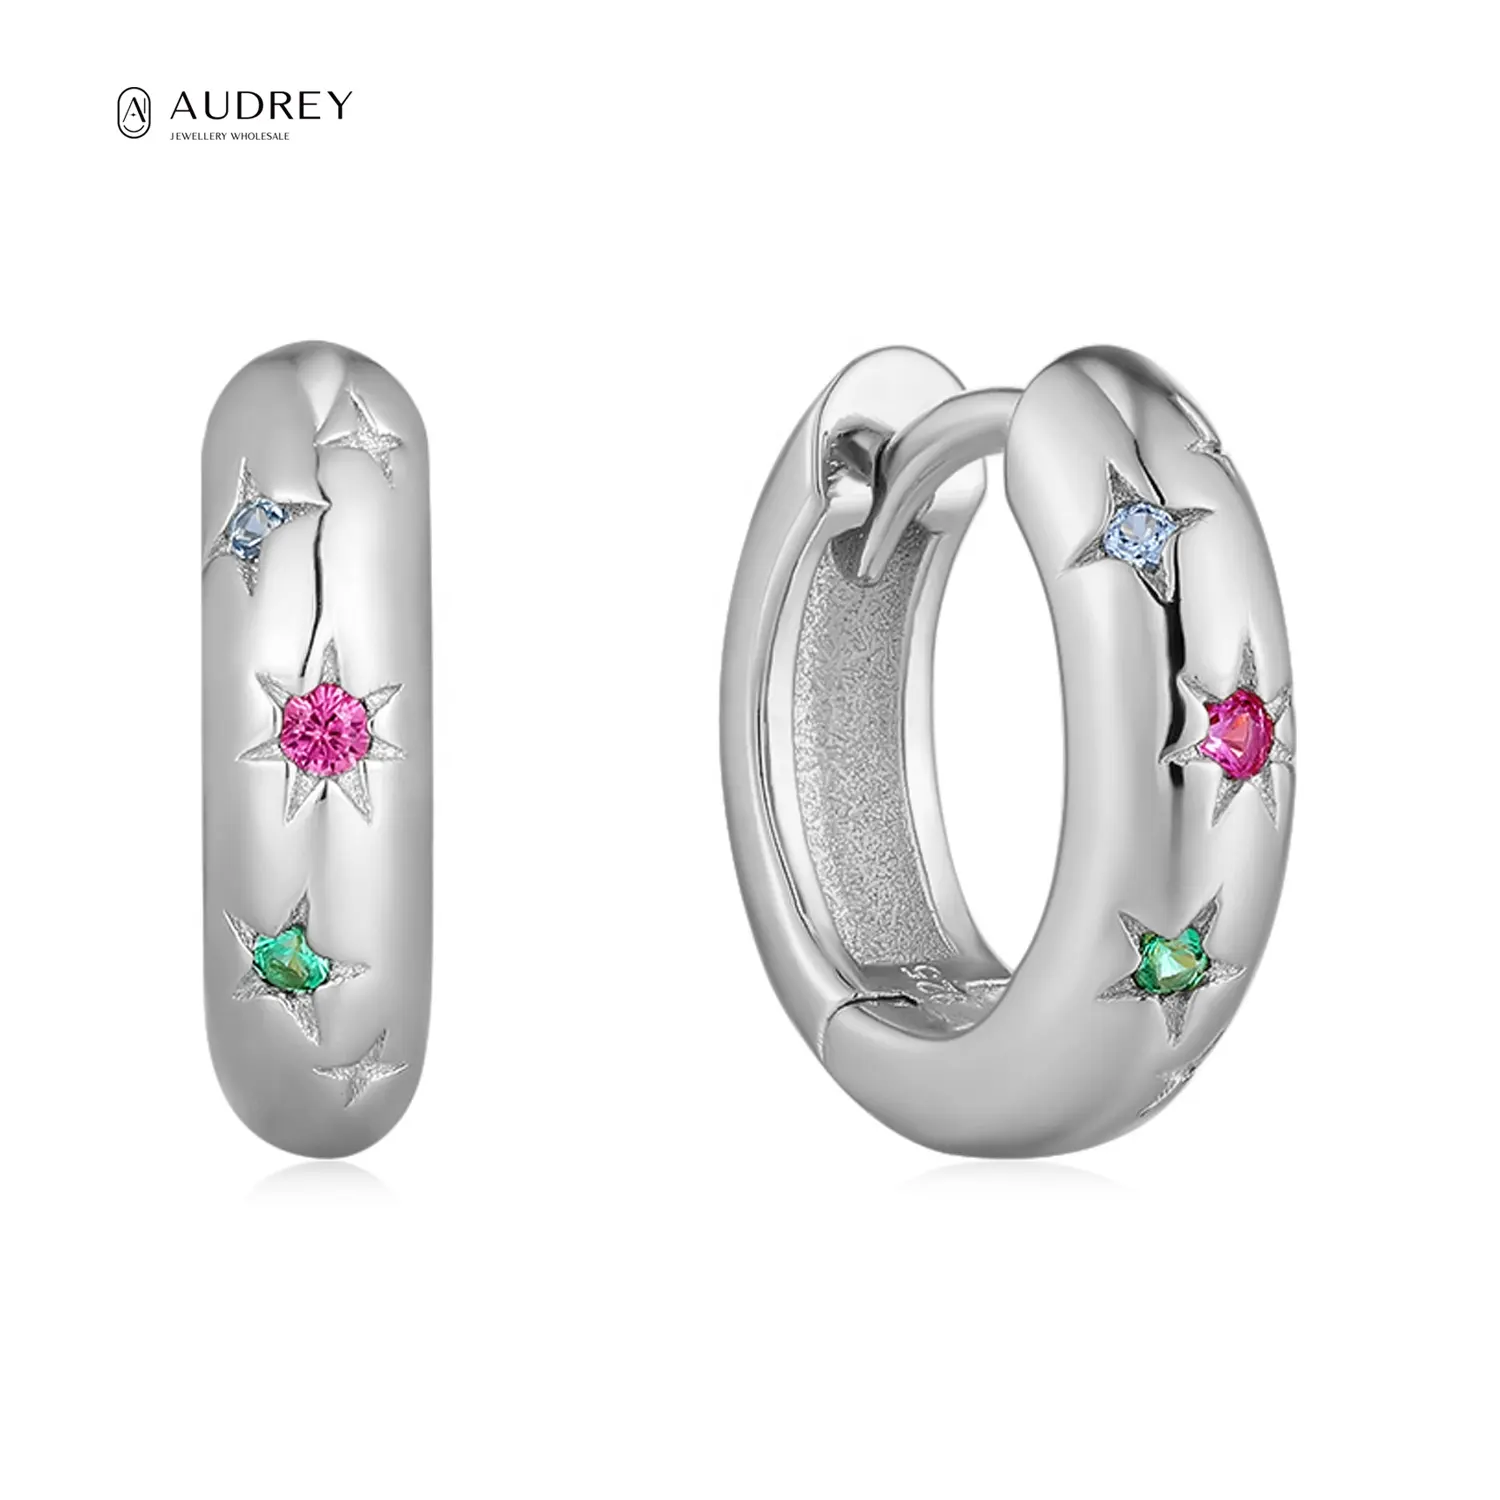 Audrey Chunky Hoop Earrings Jewelry Rhodium Plating S925 Sterling Silver Colored Gemstone Huggie Statement Earrings For Women